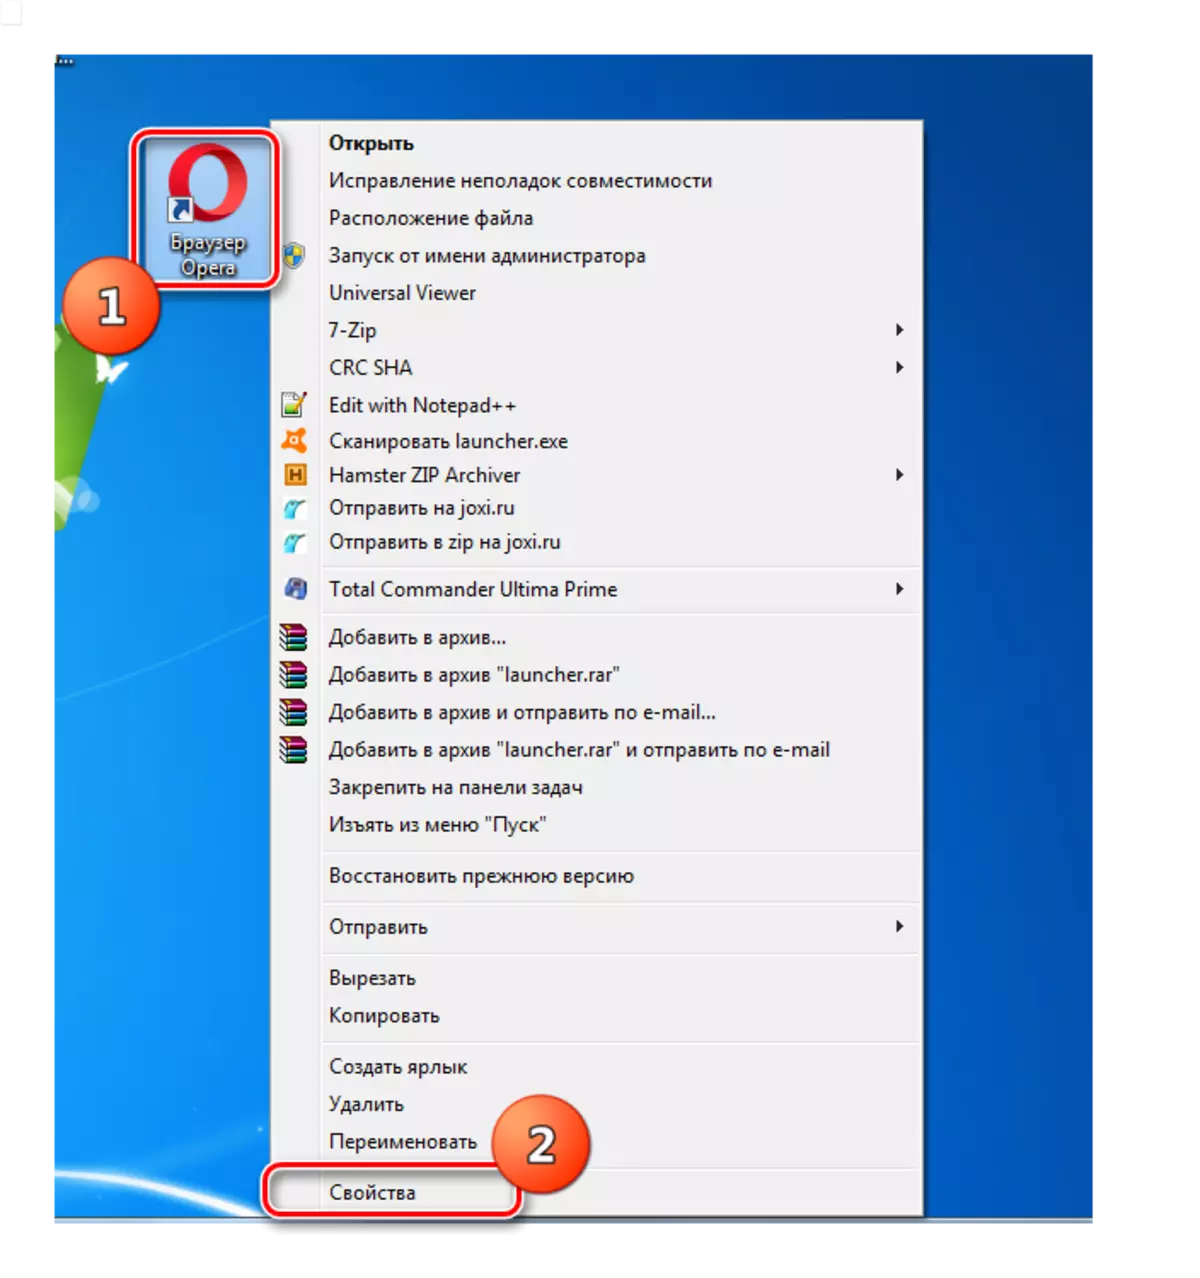 Windows 7의 컨텍스트 메뉴를 통해 Opera 브라우저 레이블 속성 창으로 이동하십시오.